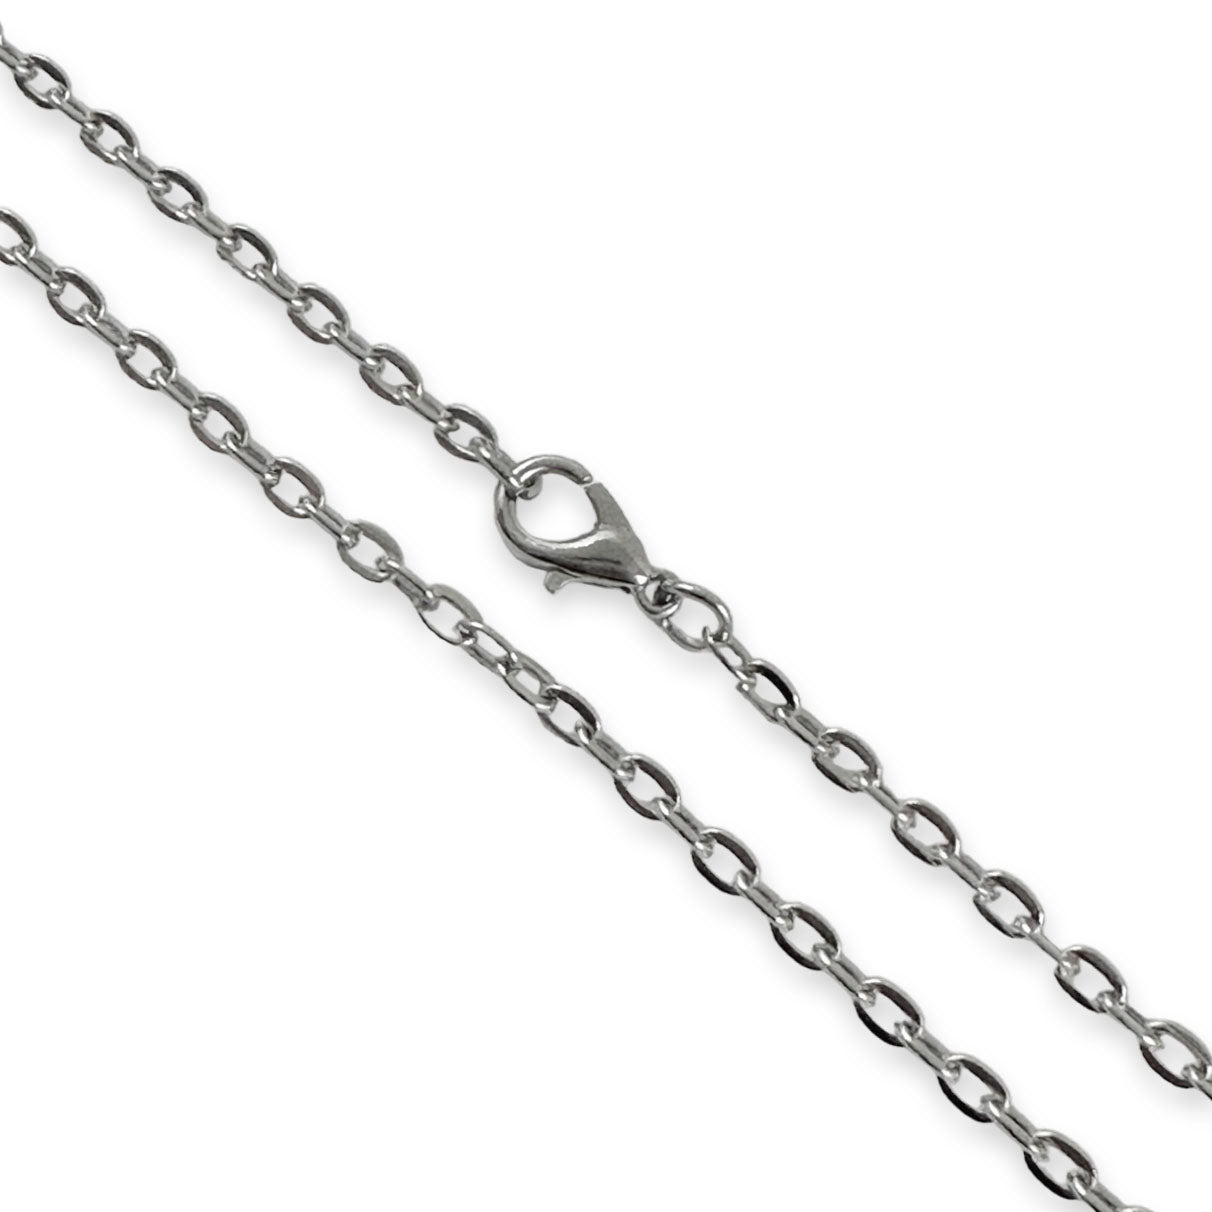 Bulk Antique Silver Link Chain Necklaces 24 - Select Quantity Pack of 20